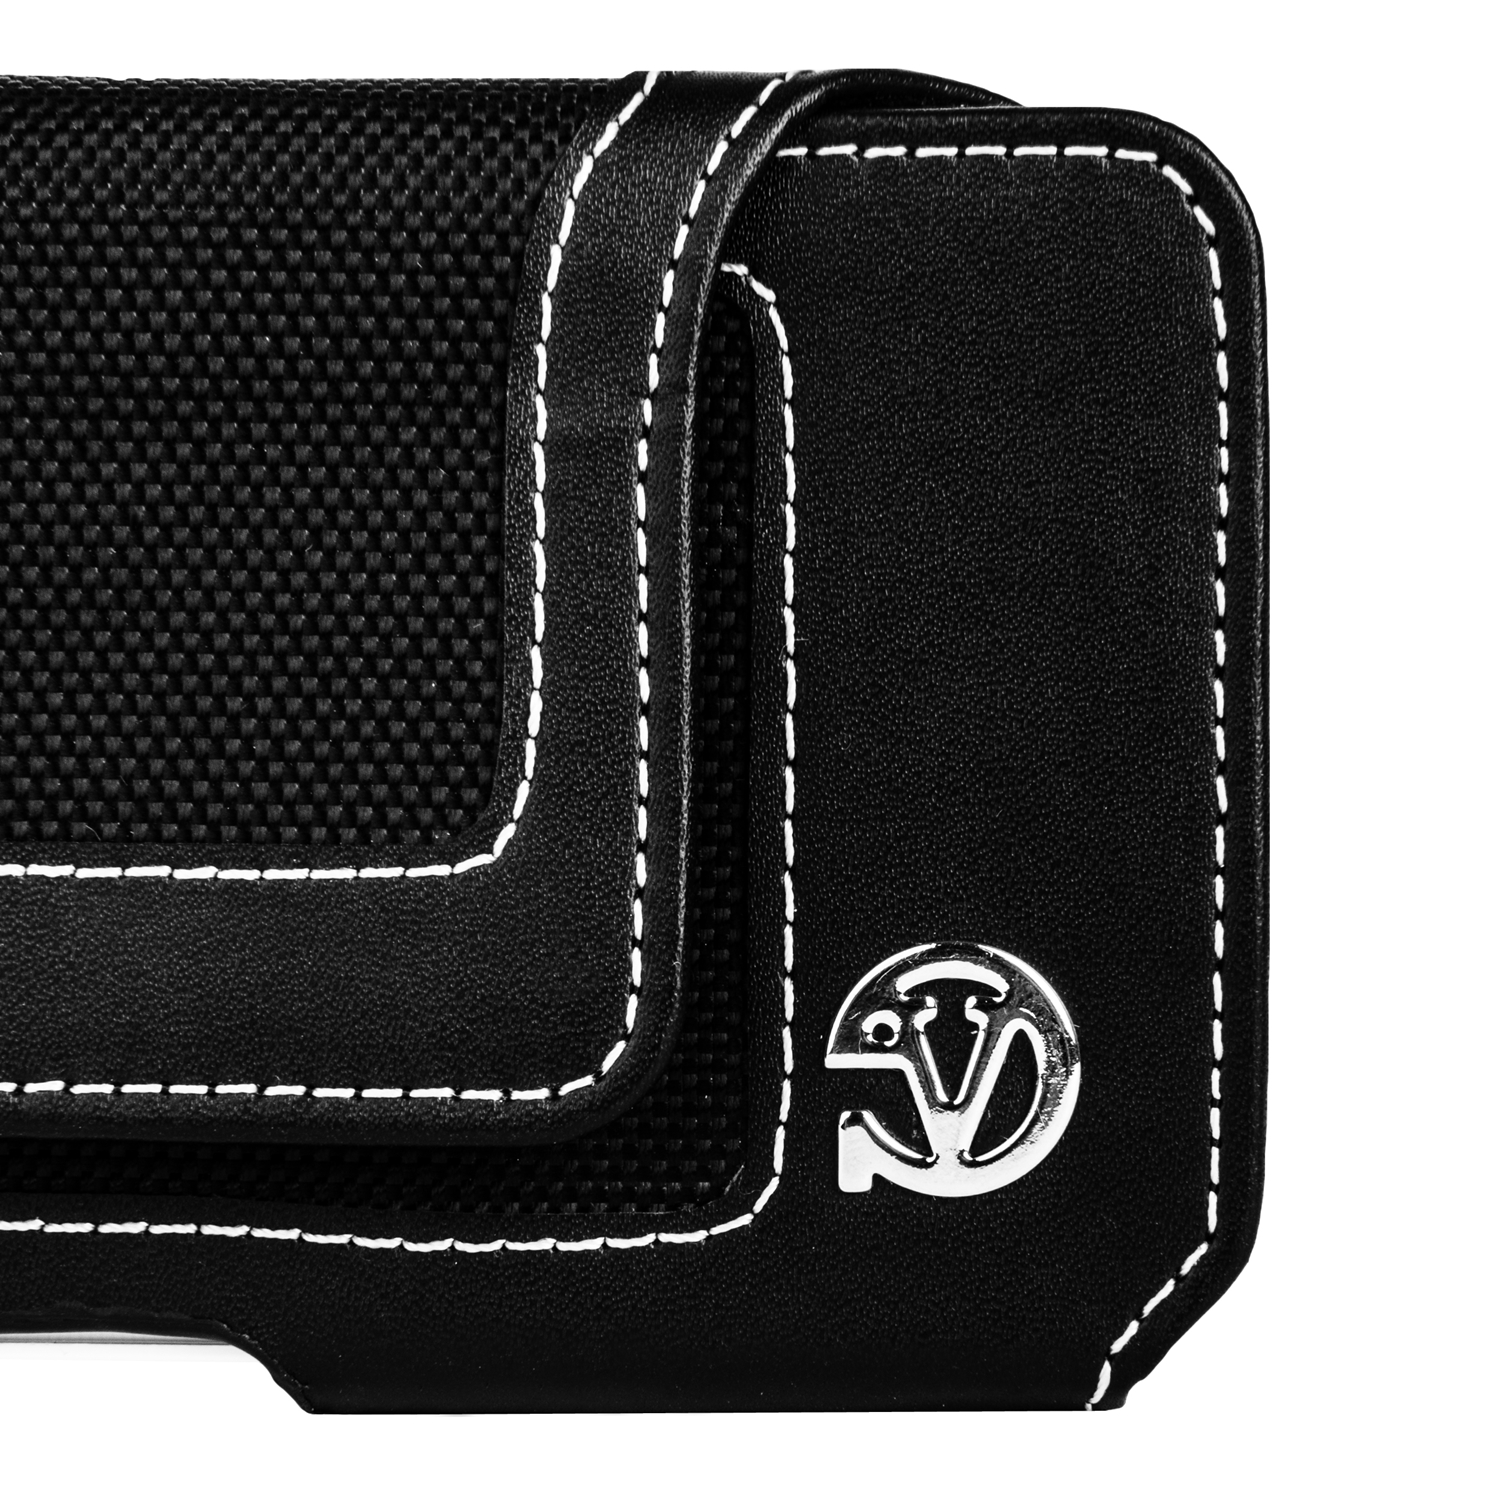 VANGODDY Nylon Loop Fastener Series Executive Phone Pouch with Belt Clip fits BLU Vivo Air